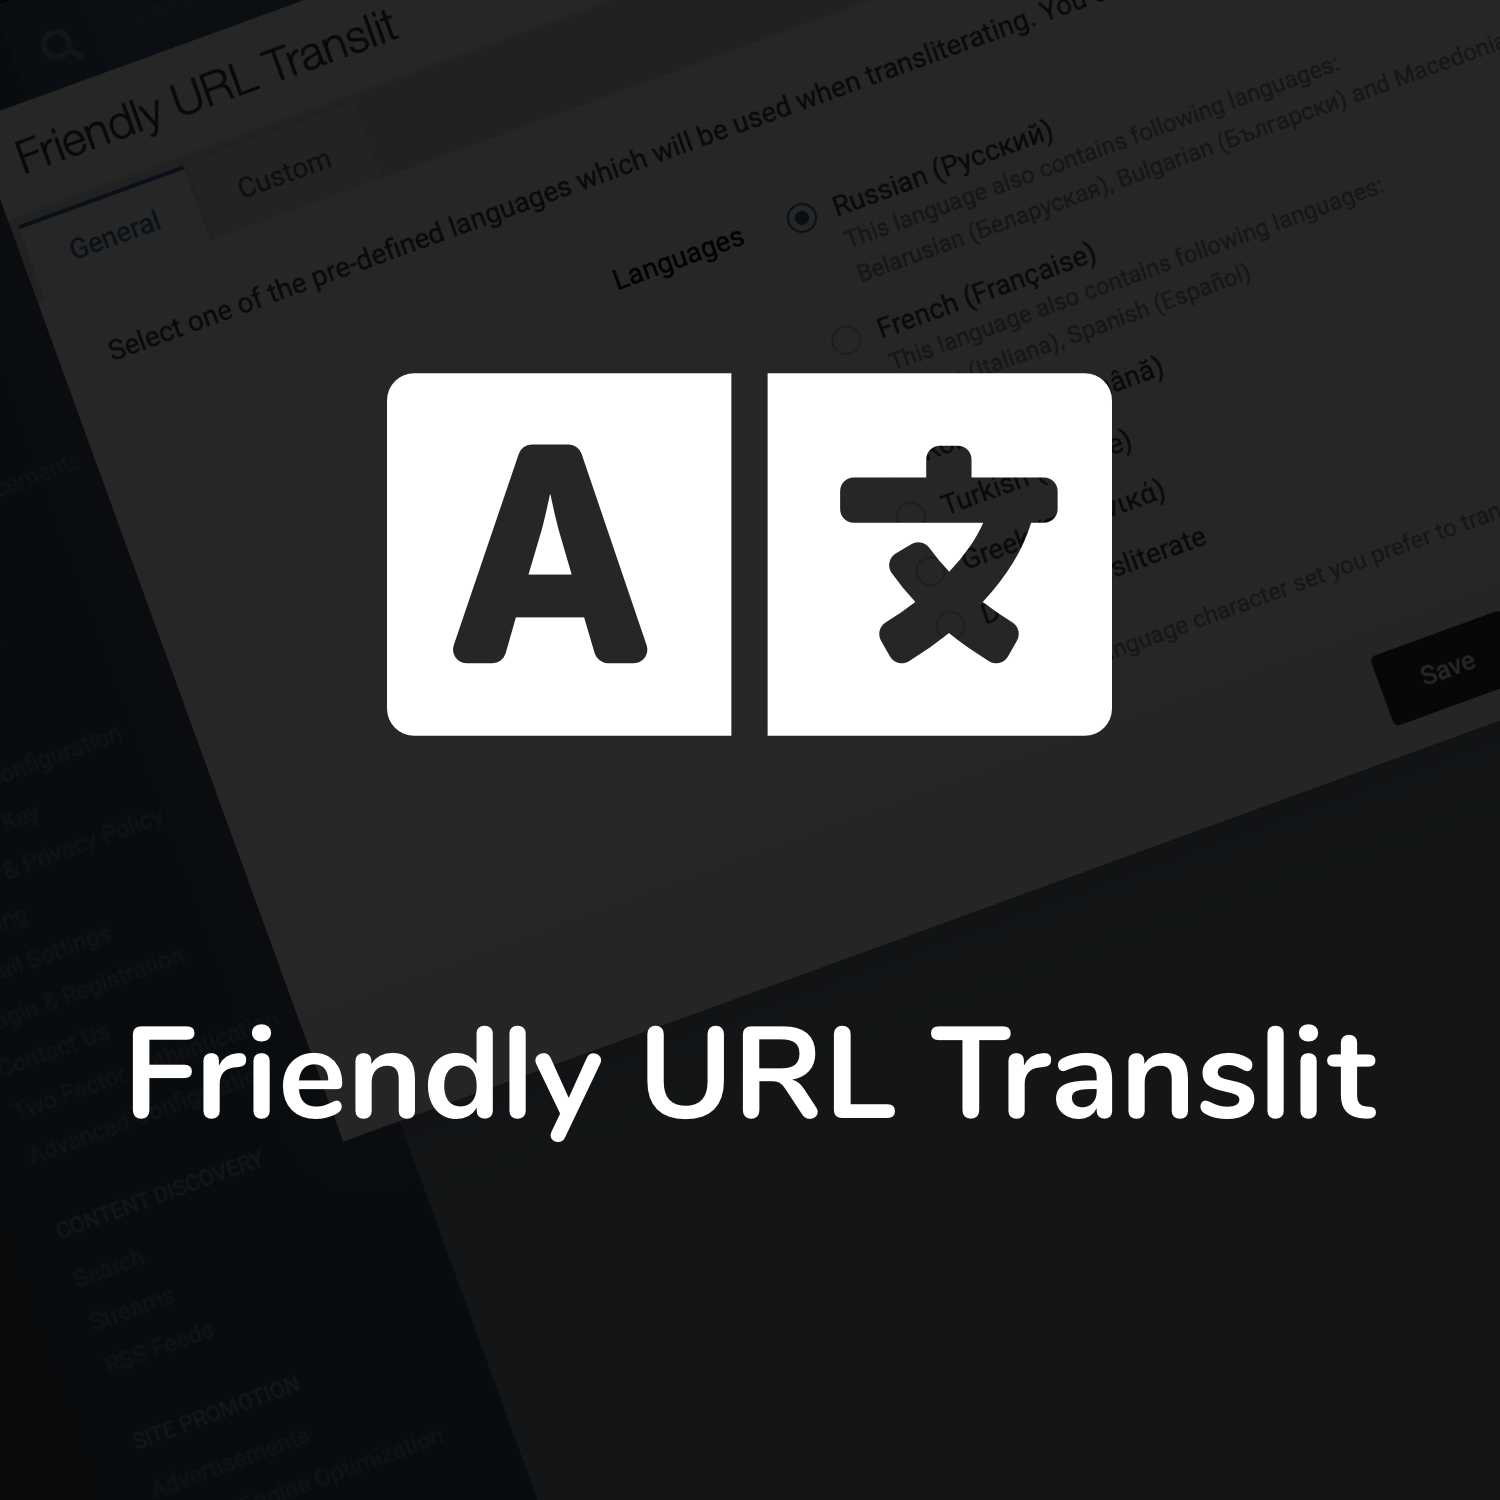 Friendly URL Translit